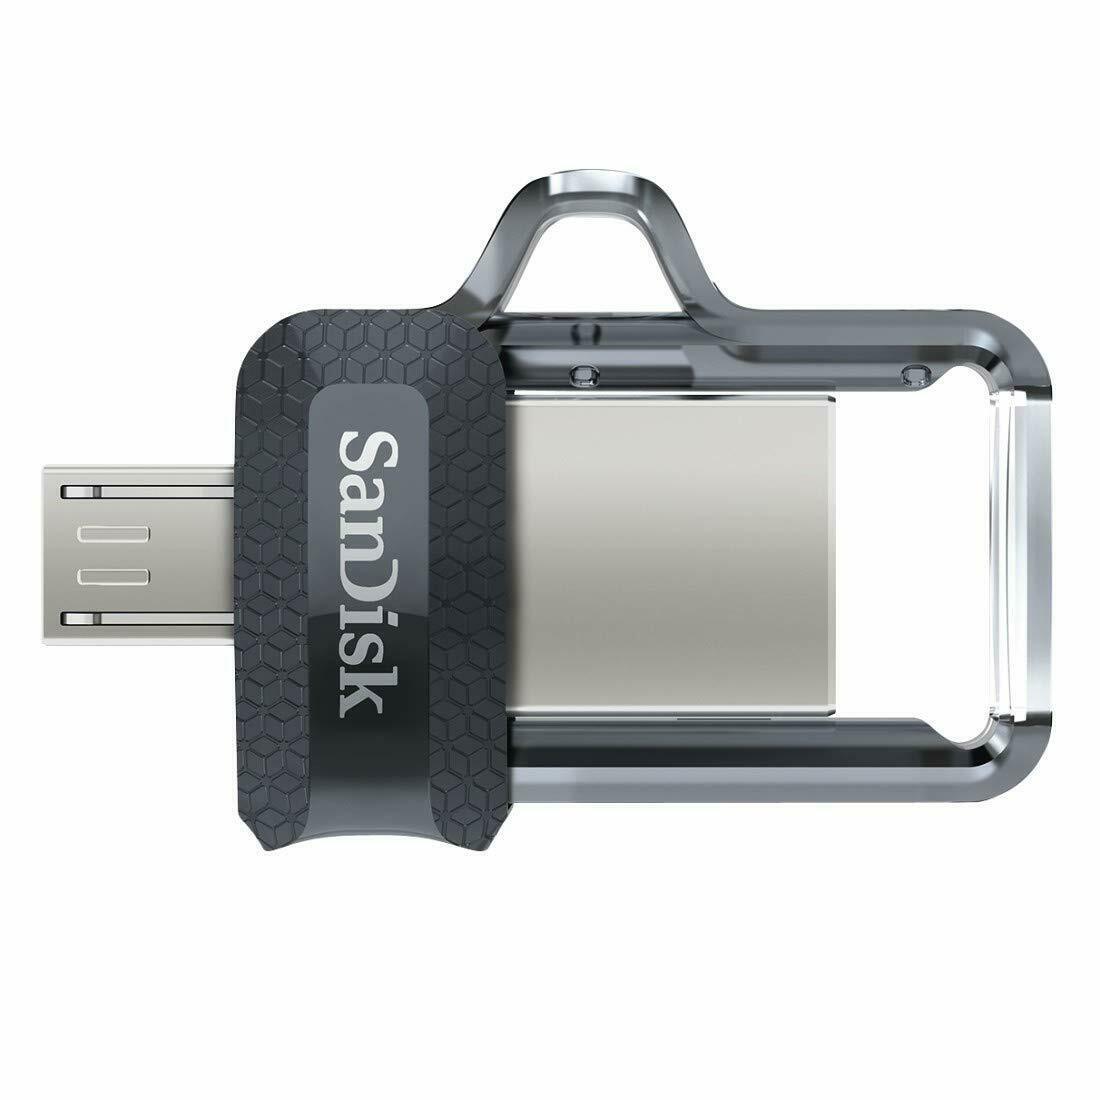 Sandisk SDDD3 G46 M3.0 Android Micro USB Flash Pen Drive Thumb 3.0